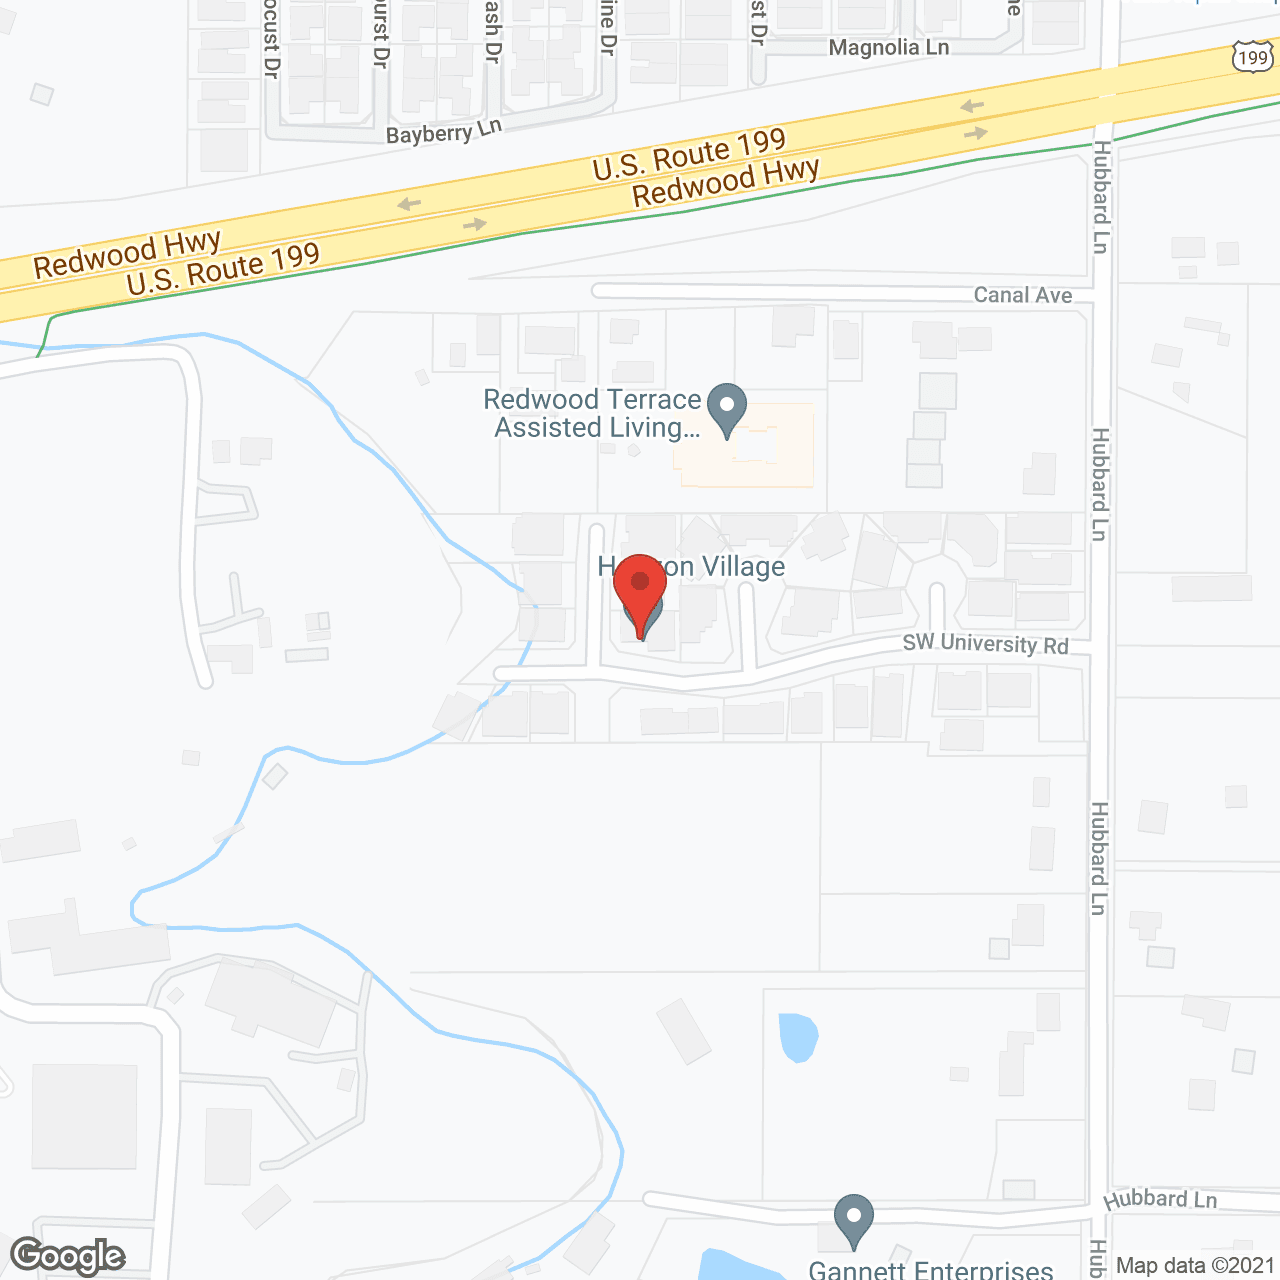 Horizon Village Community in google map